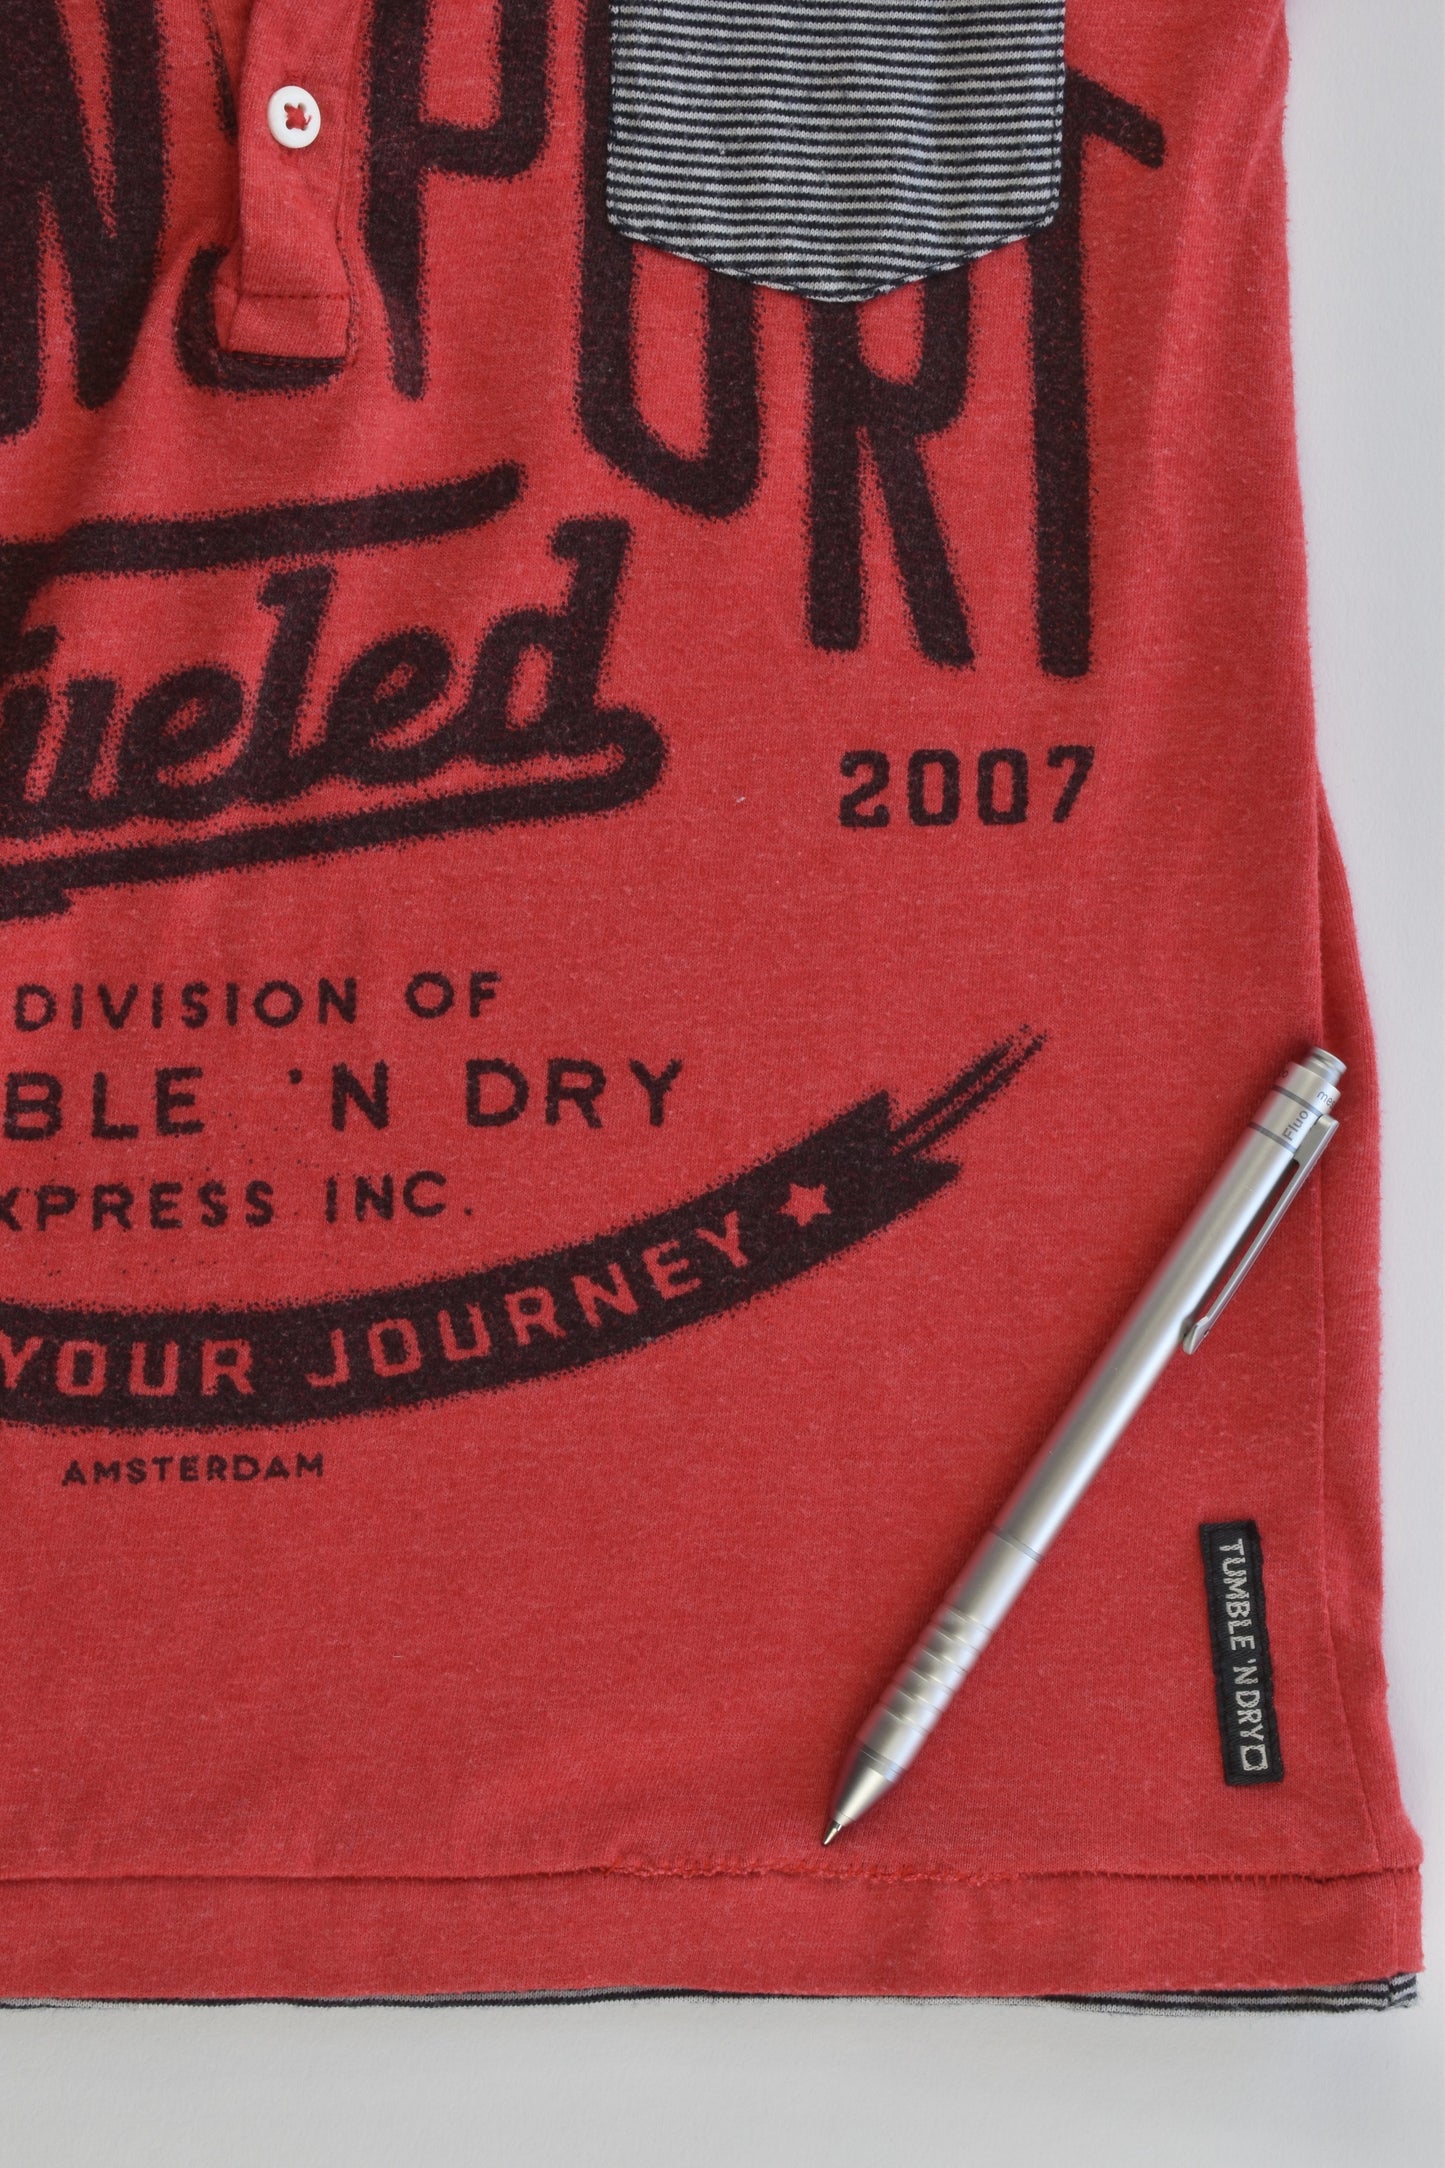 Tumble 'N Dry Size 5/6 (116 cm) 'Enjoy Your Journey' T-shirt